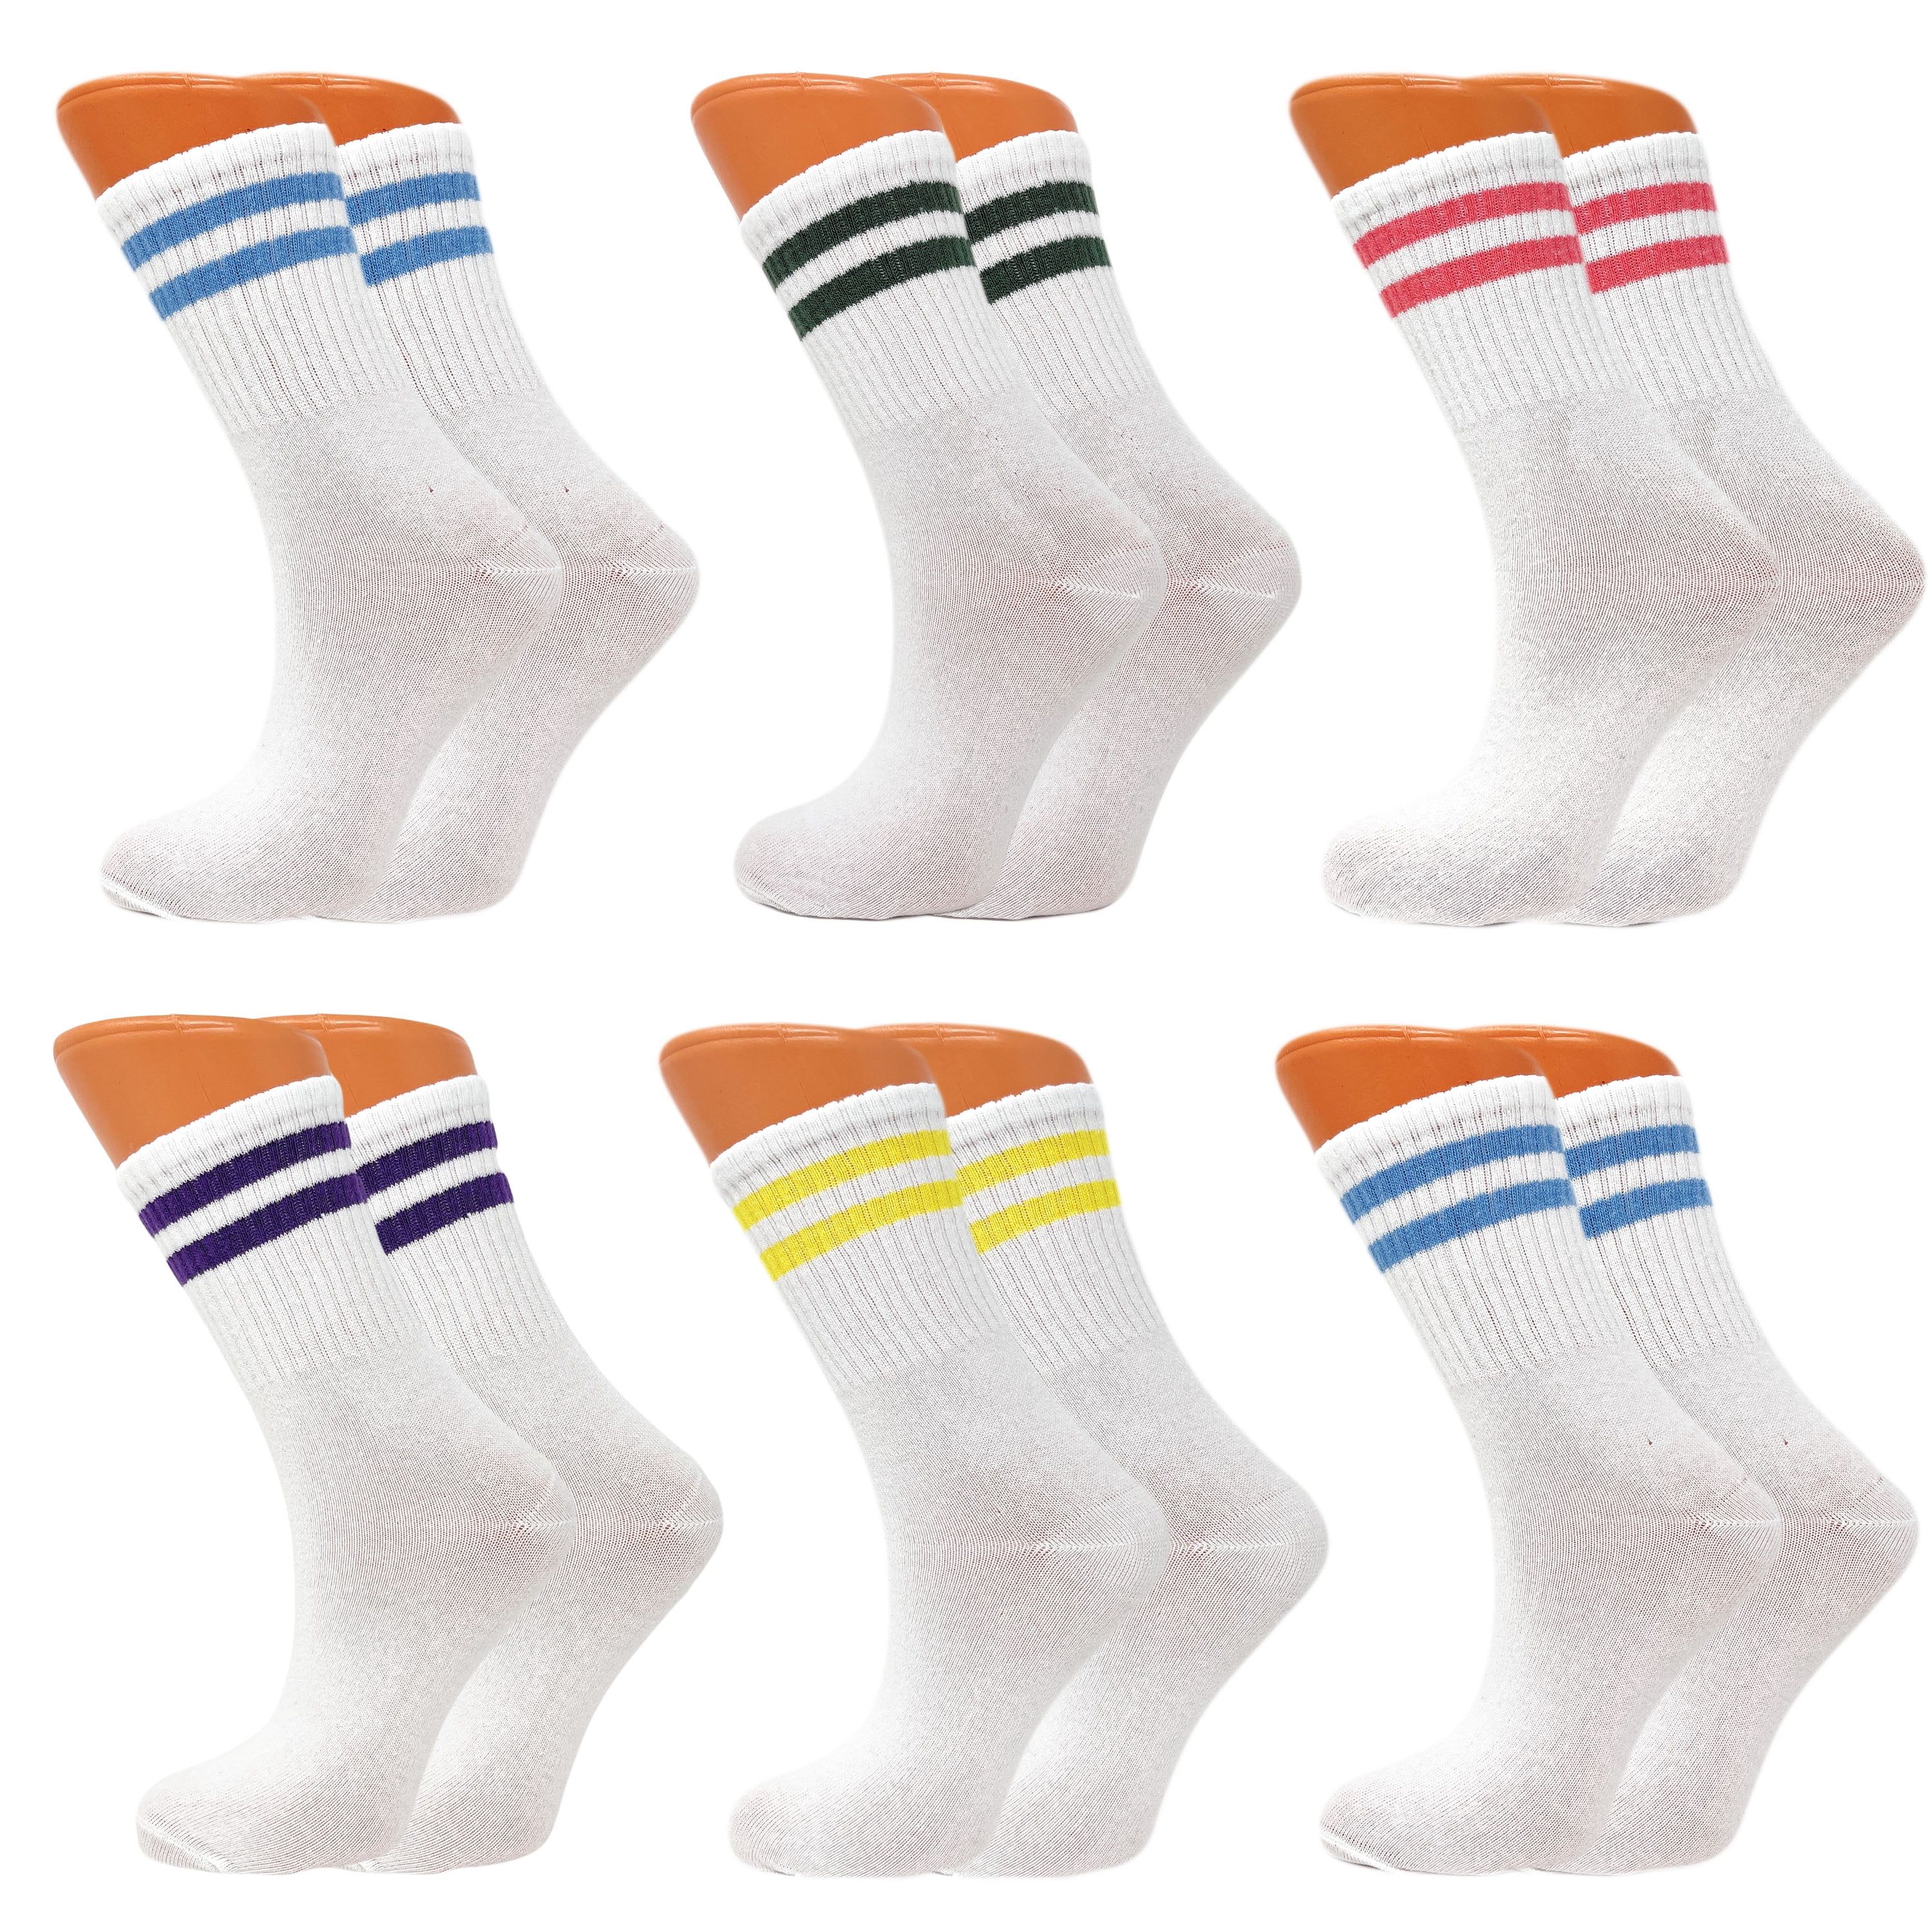 Tennis Crew Socks for Women 6 Pairs Cotton Extra Thin Socks Size 9-11 - Style 1 | Walmart (US)